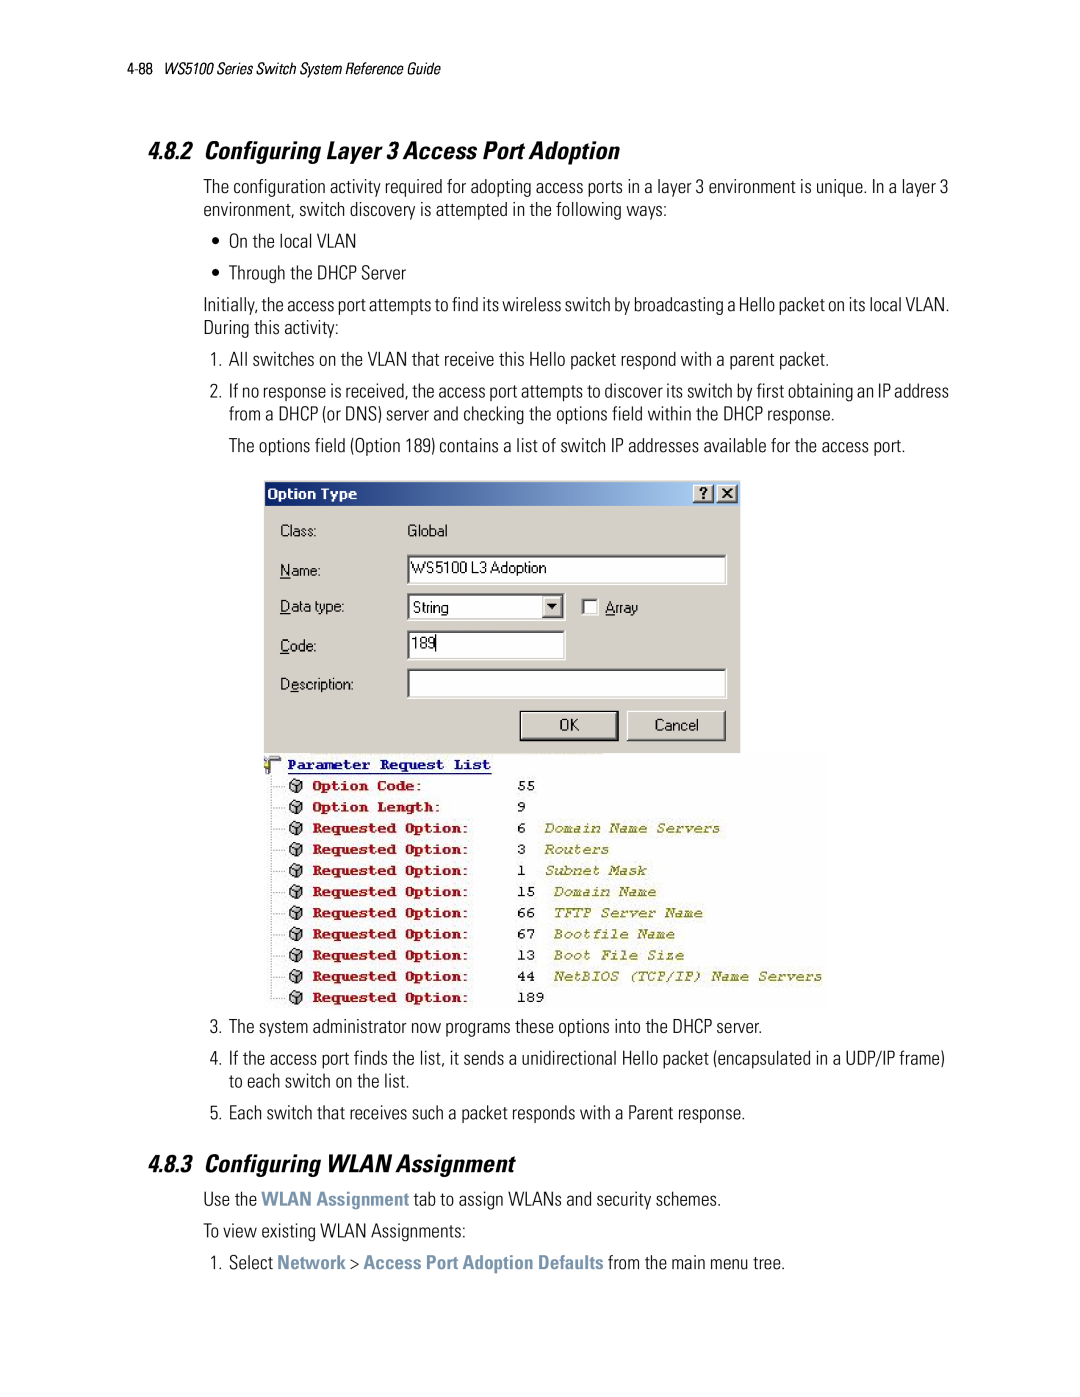 Motorola WS5100 manual Configuring Layer 3 Access Port Adoption, 4.8.3Configuring WLAN Assignment 